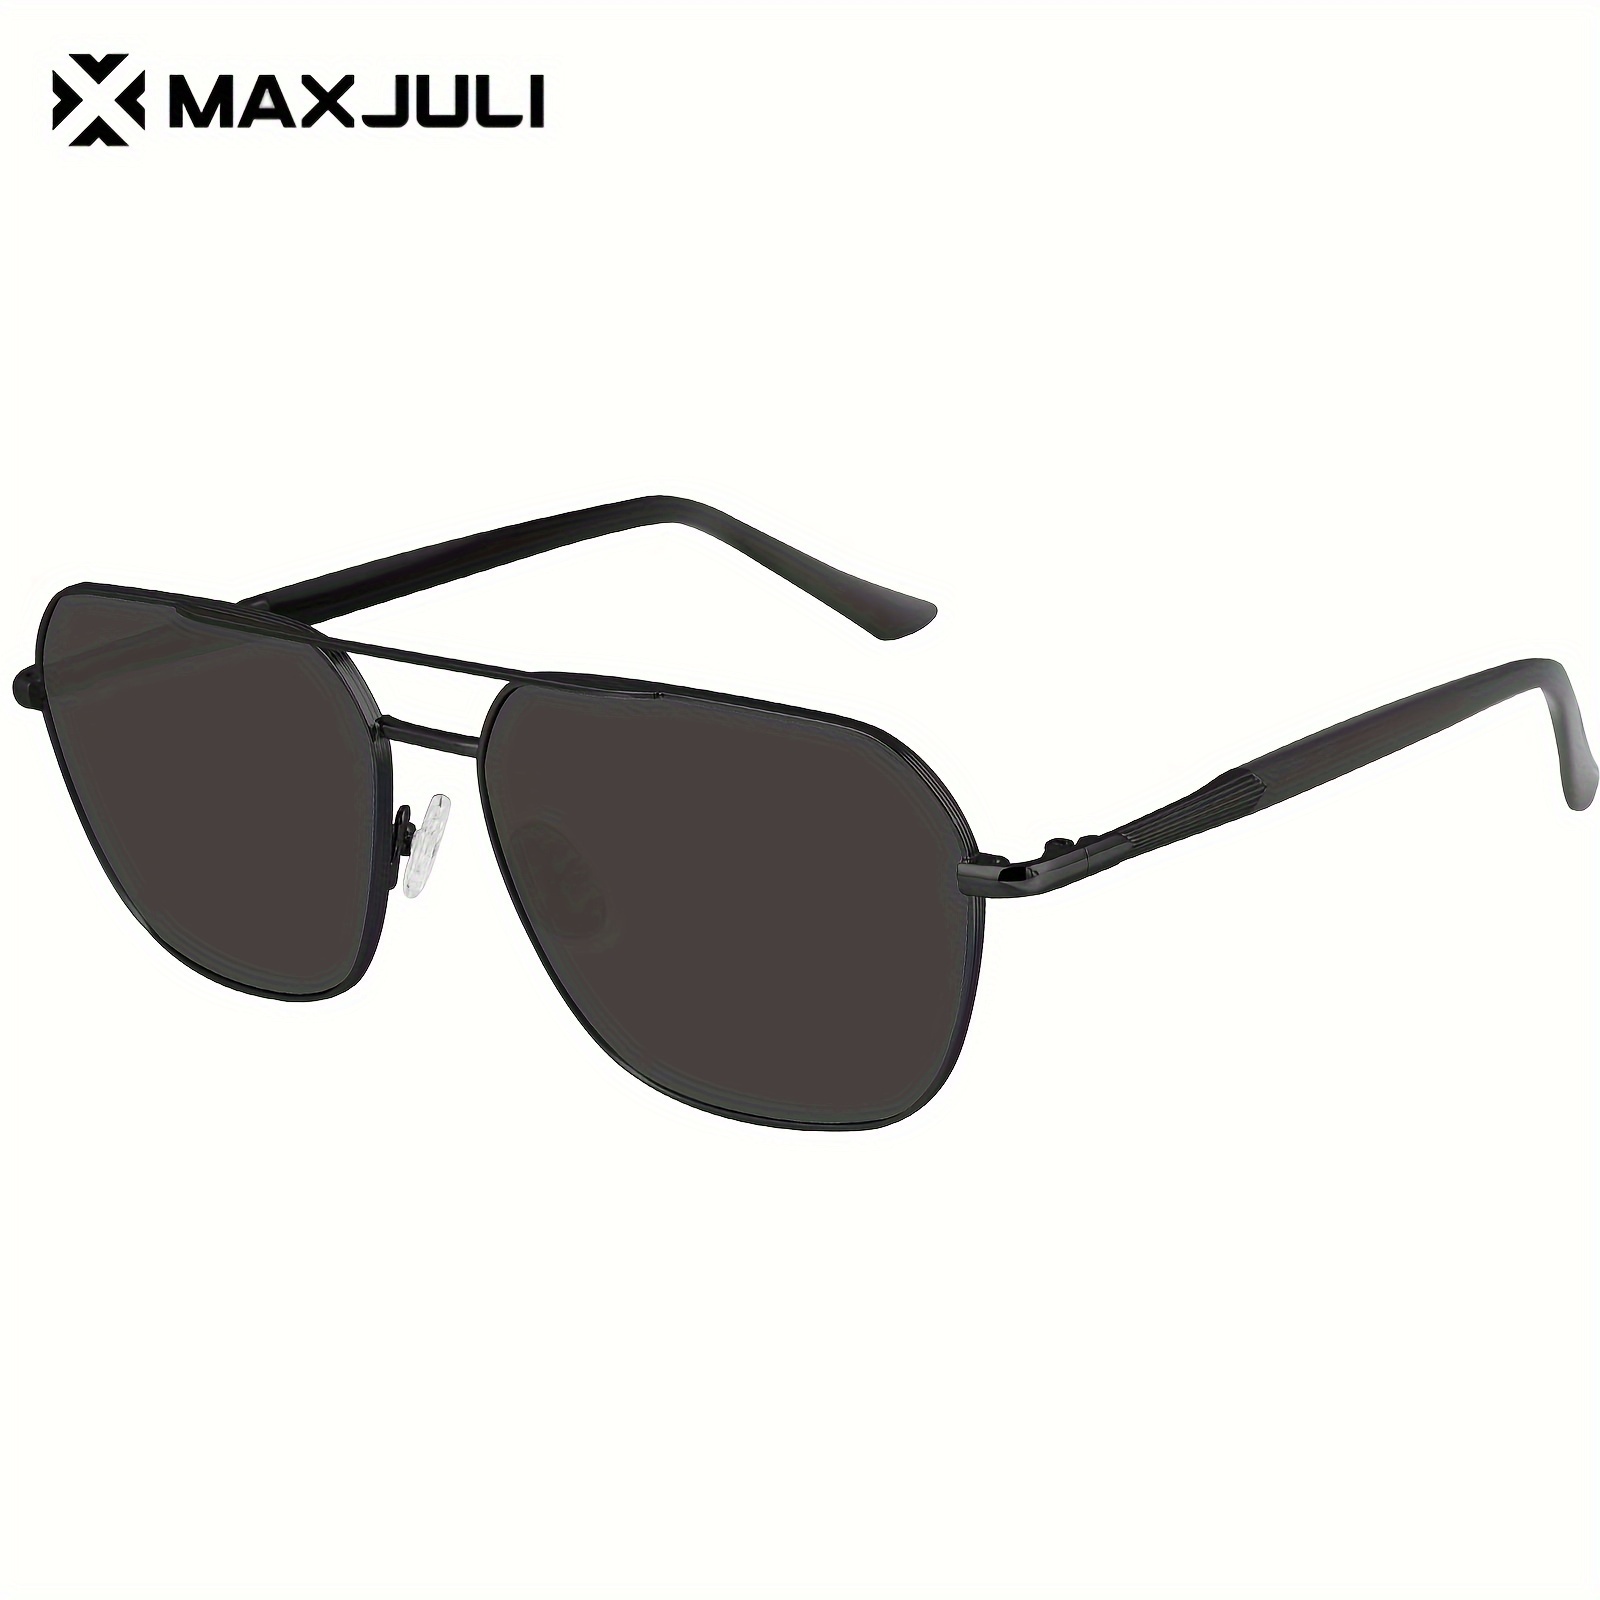 Max Large Black Polarized Mens Womens Aviator Sunglasses